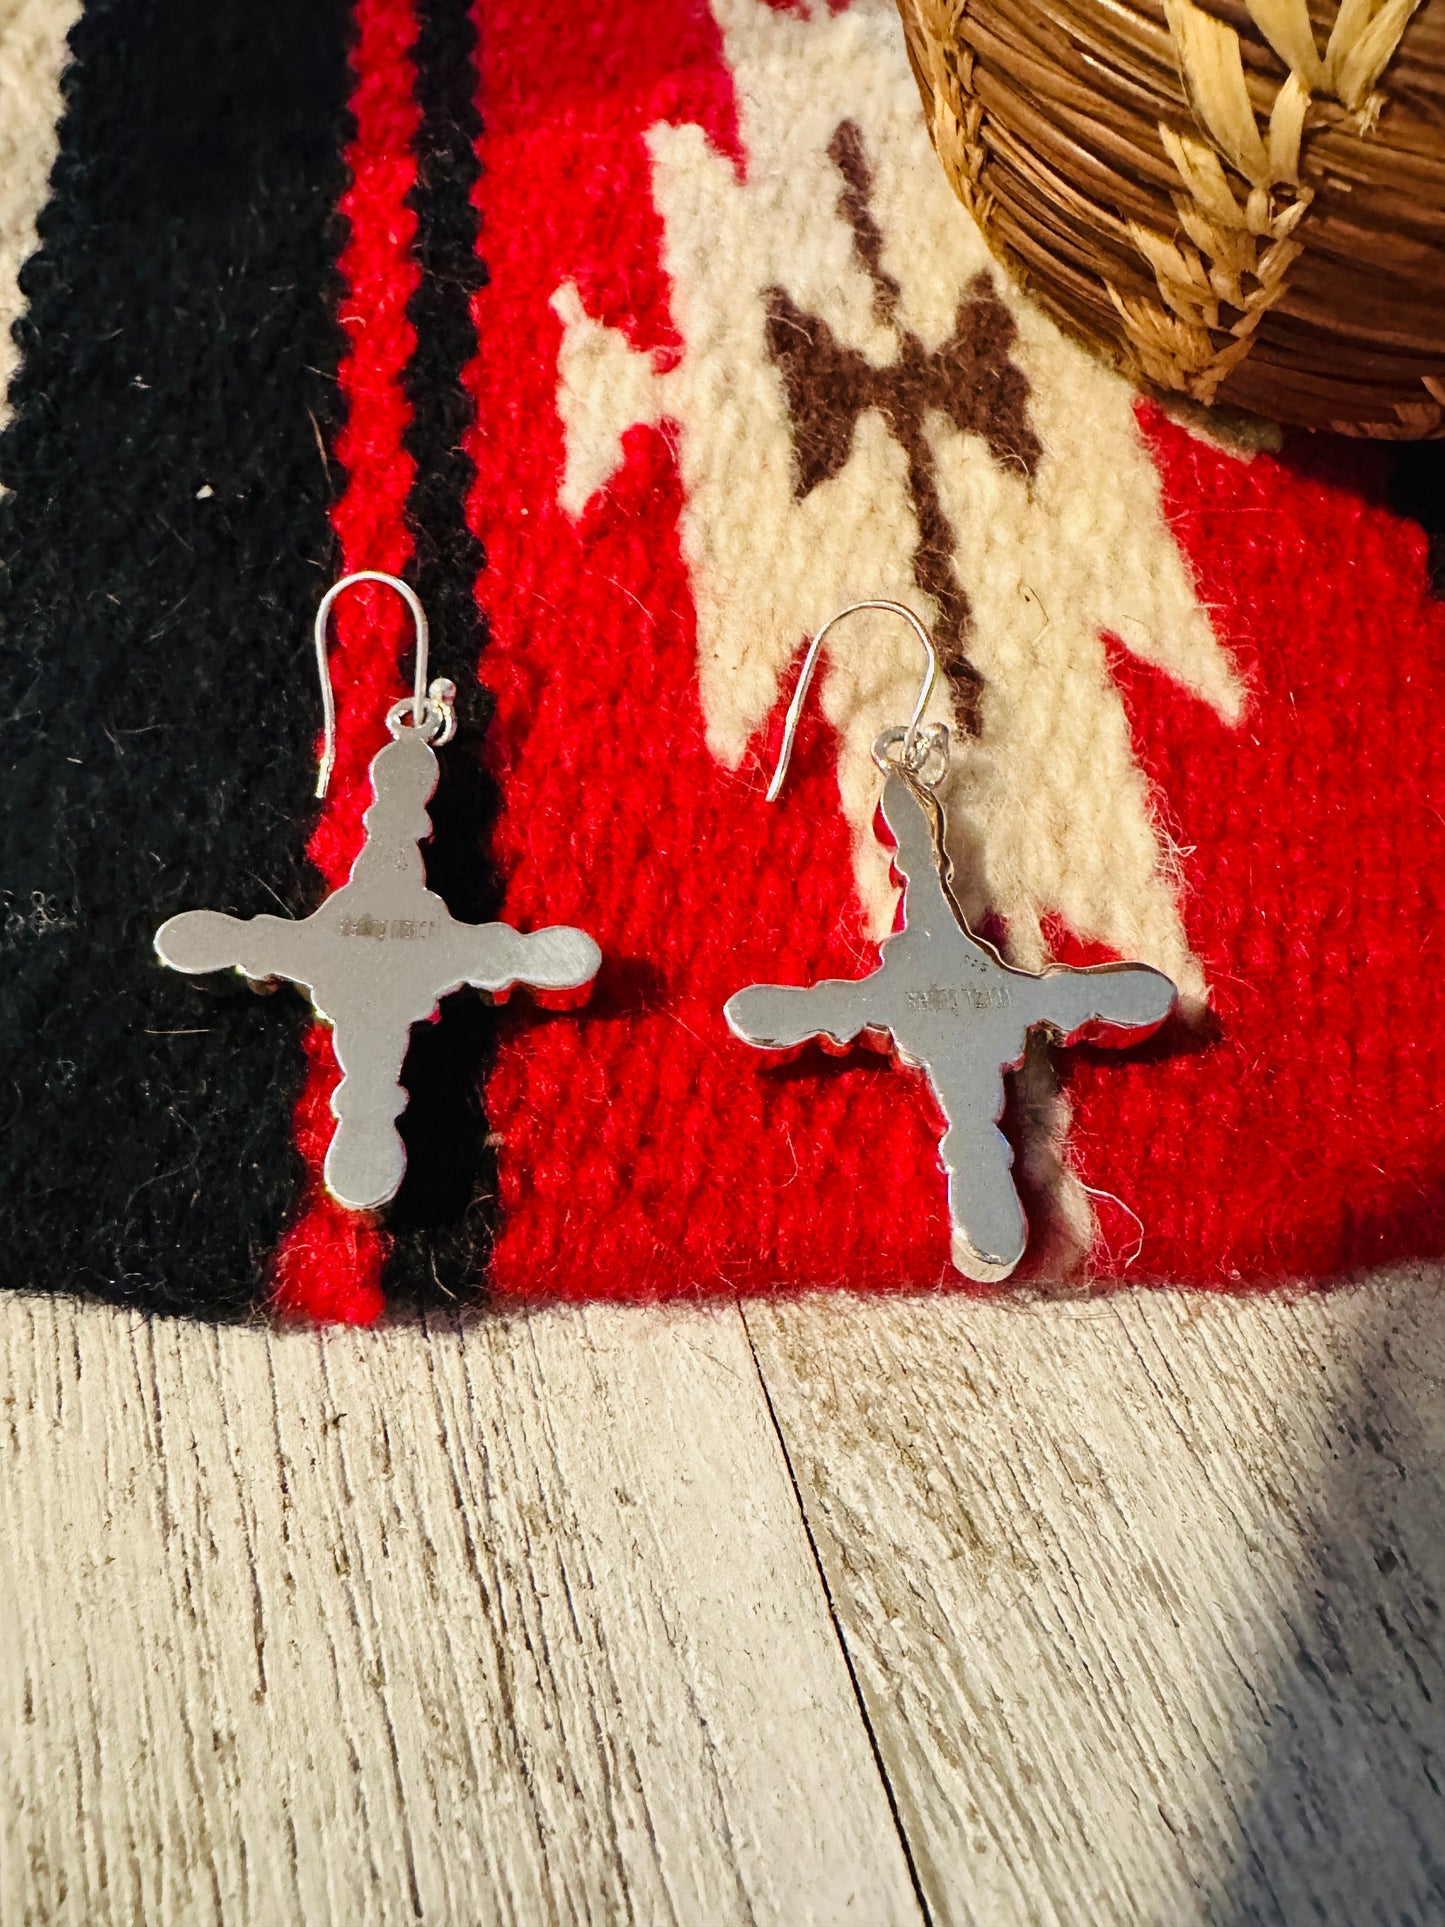 Handmade Opal & Sterling Silver Cross Dangle Earrings Signed Nizhoni